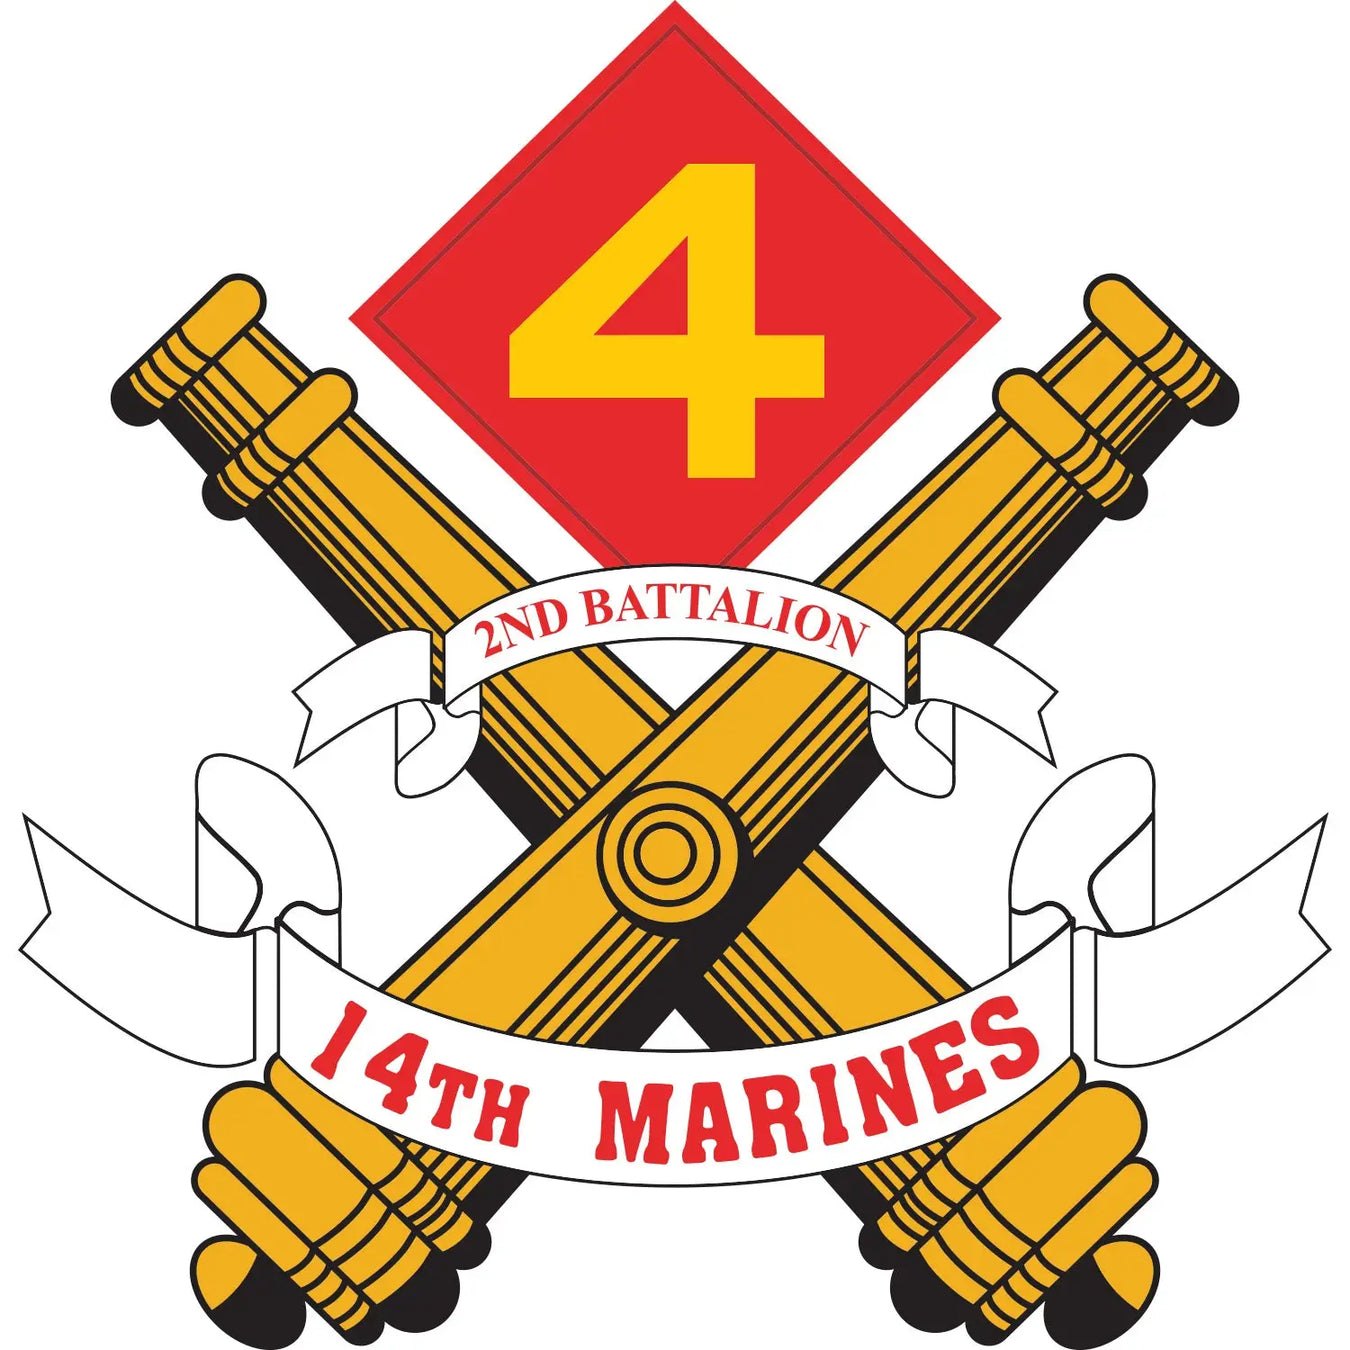 2nd Battalion, 14th Marines